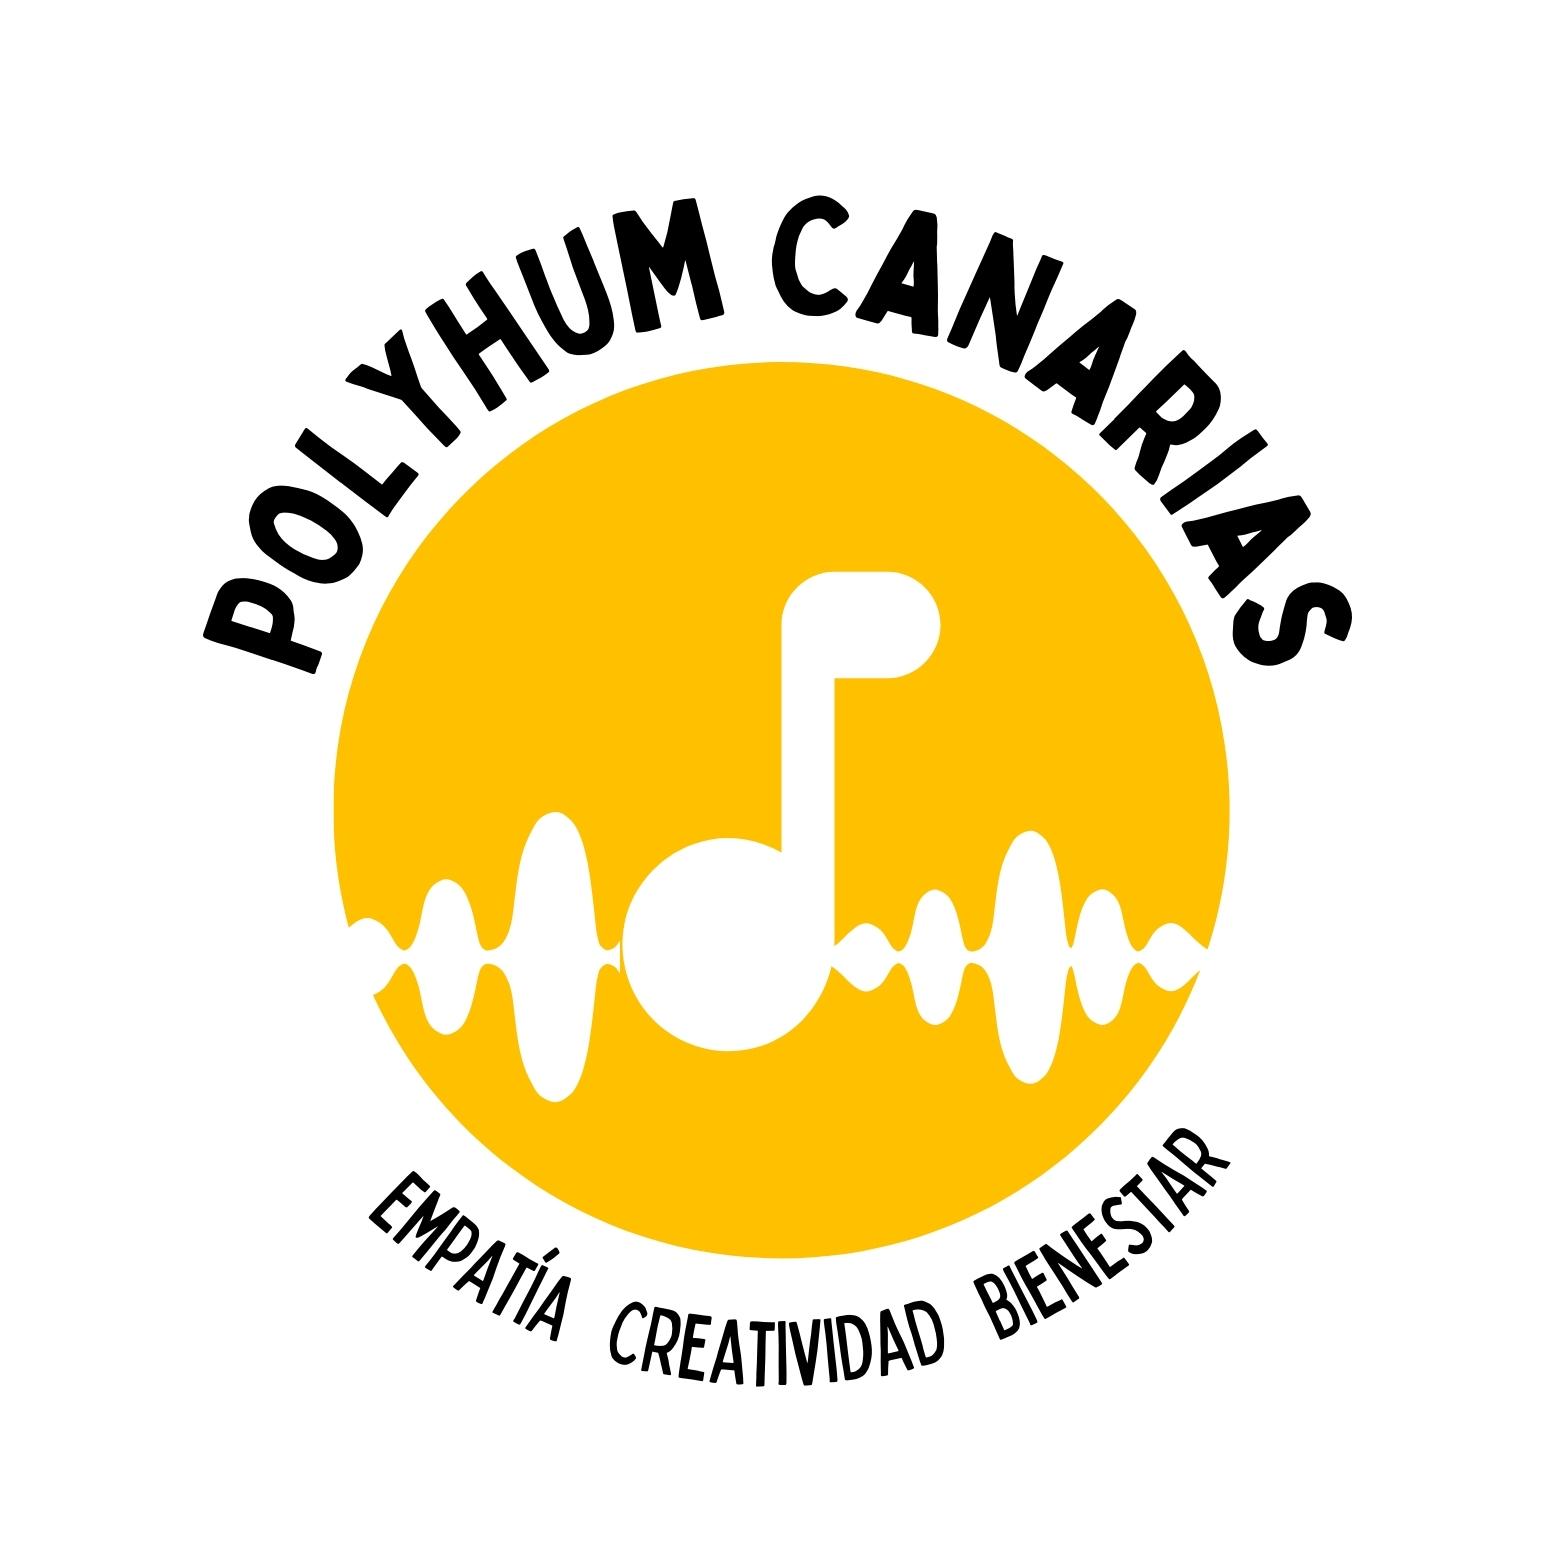 Polyhum Canarias LogoPHC.jpg